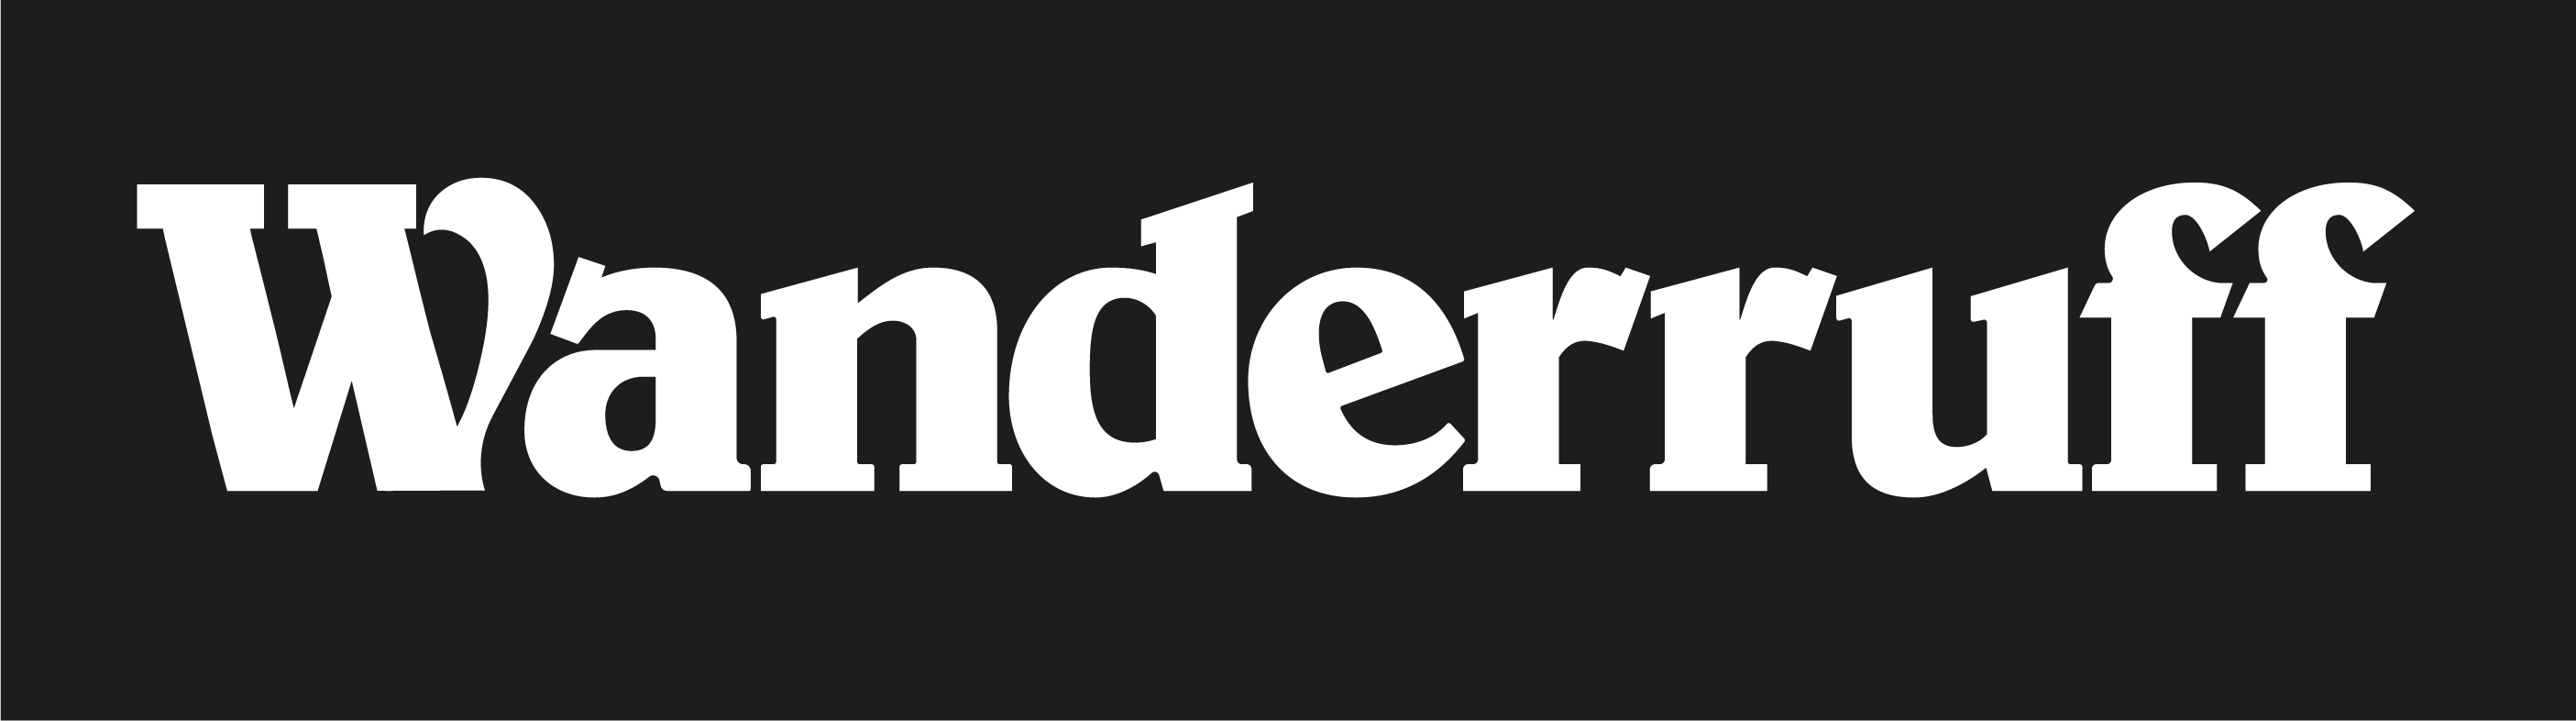 Wanderrfuff logo